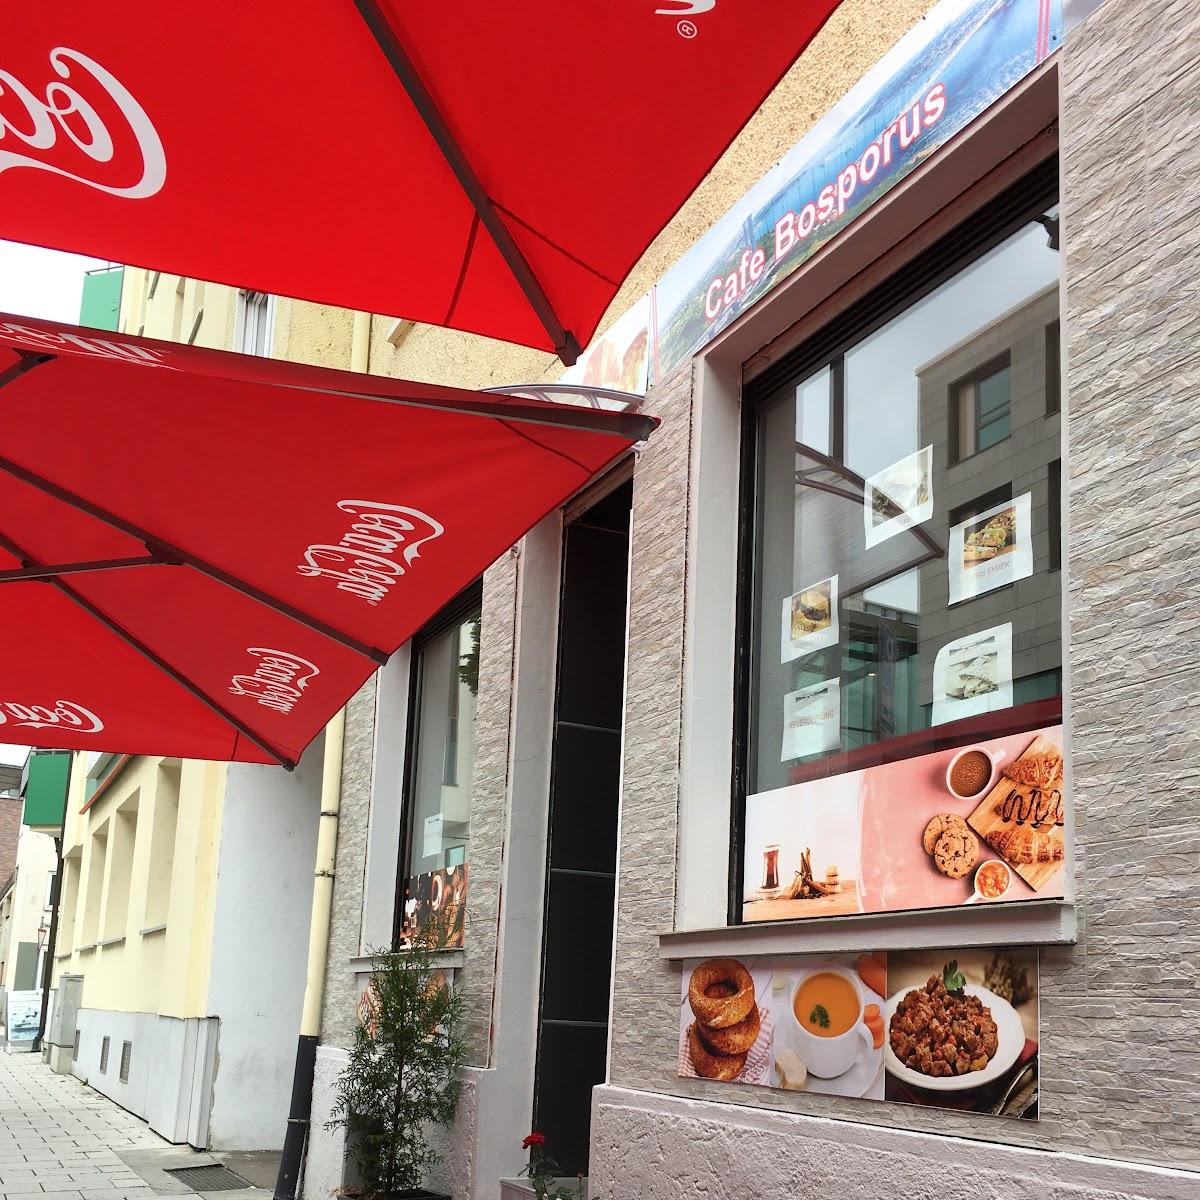 Restaurant "Cafe Bosporus" in Neu-Ulm